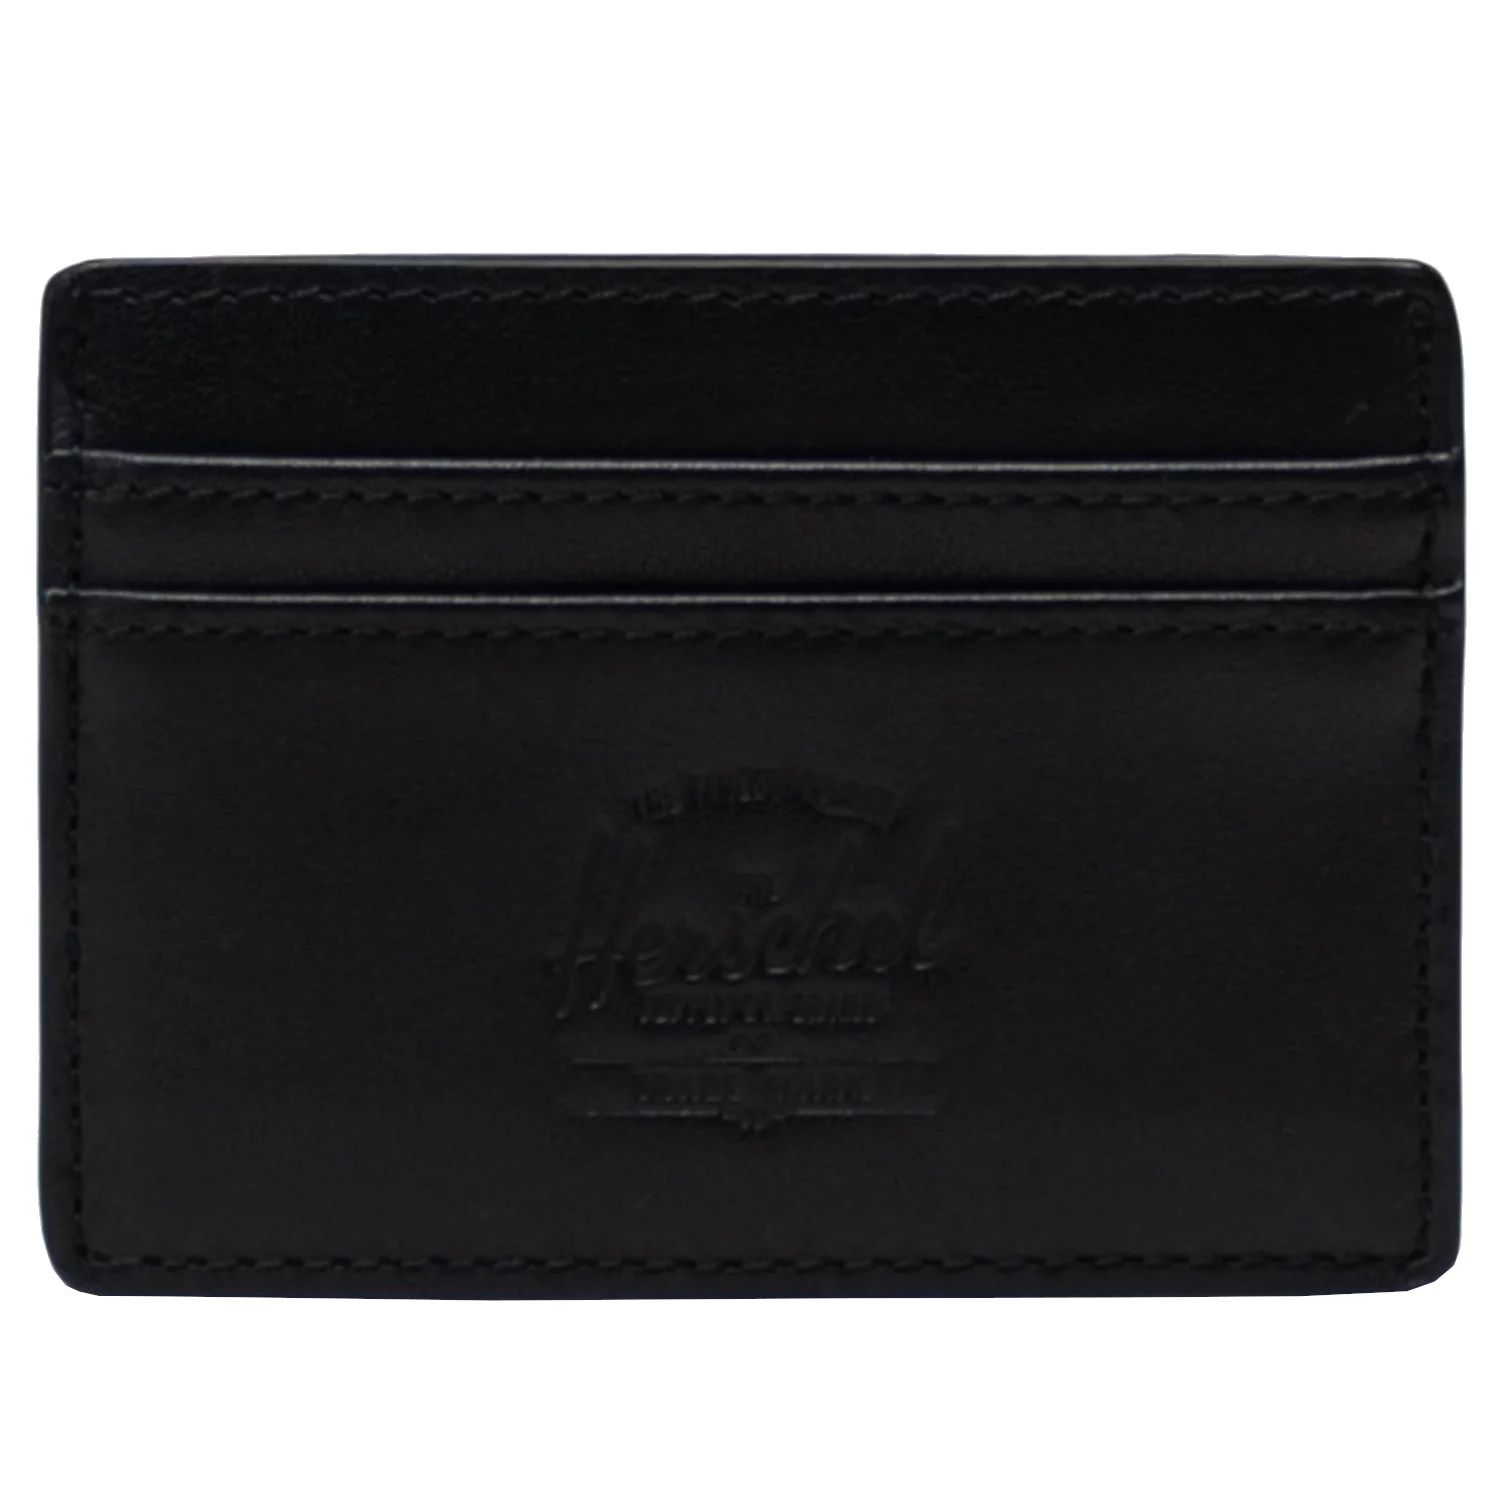 Фото - Портмоне / гаманець Herschel Charlie Leather RFID Wallet 11146-00001, Unisex, Czarne, portfele 